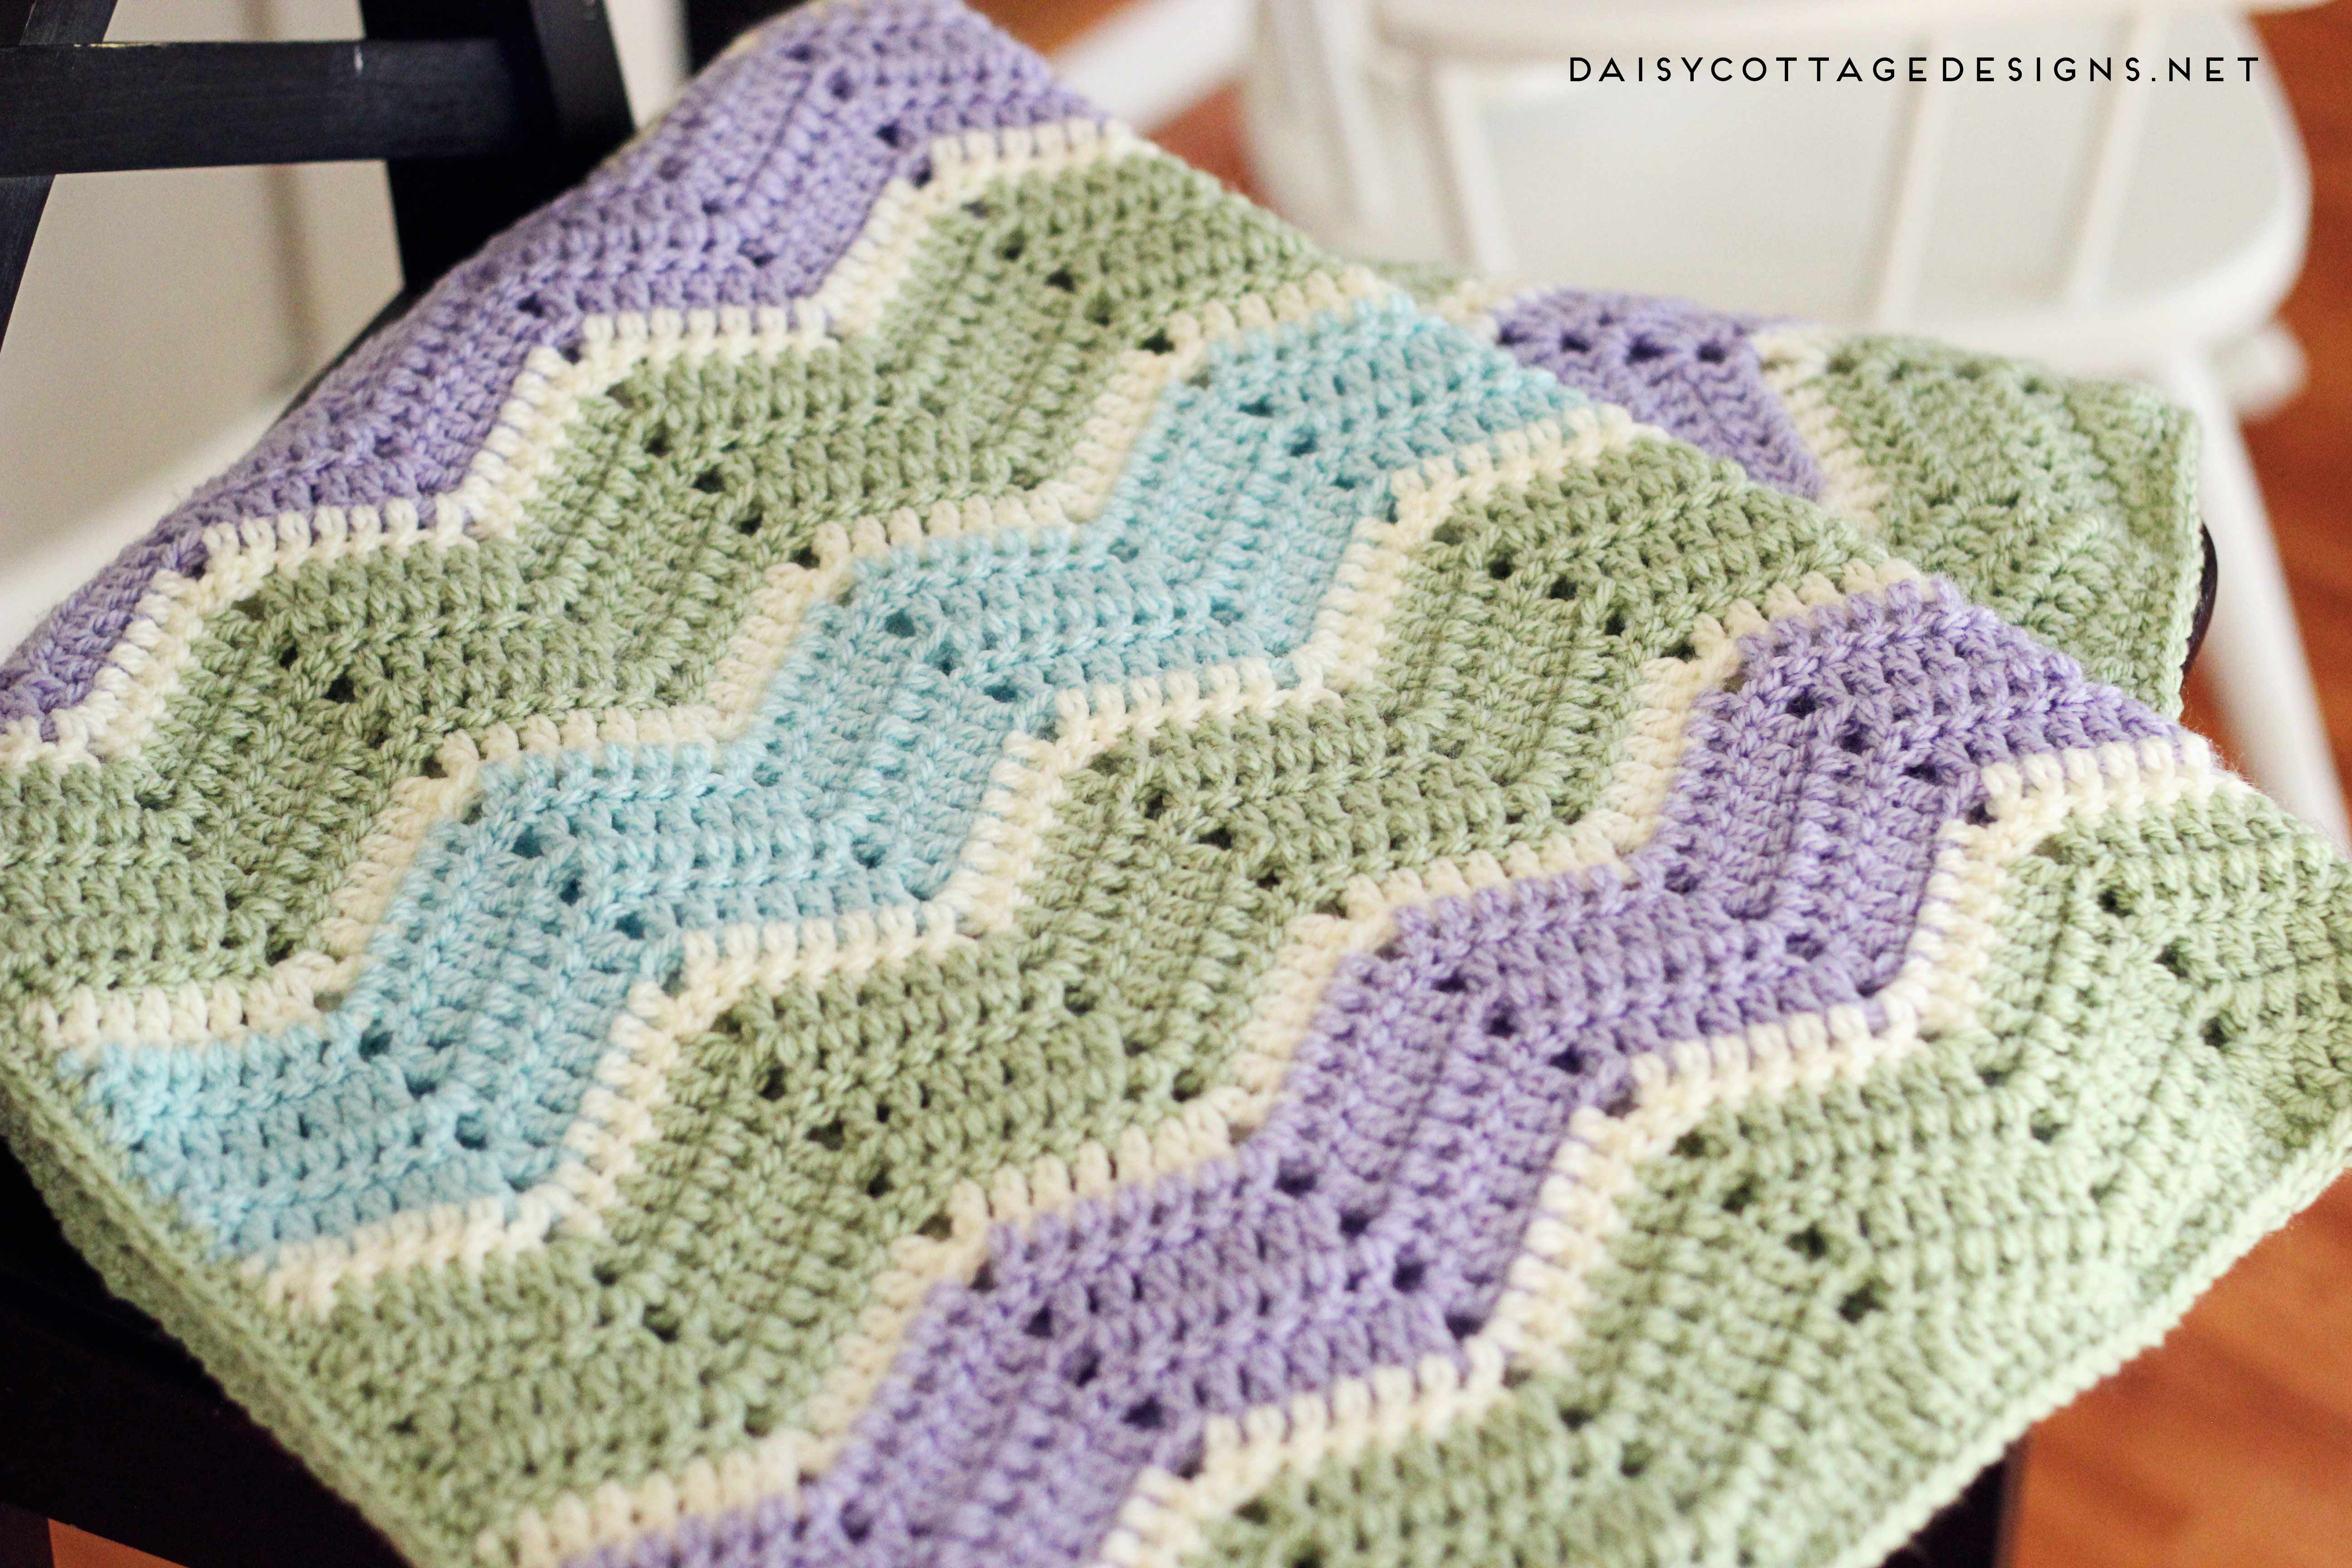 Crochet Baby Shawls Free Patterns Easy Chevron Blanket Crochet Pattern Daisy Cottage Designs